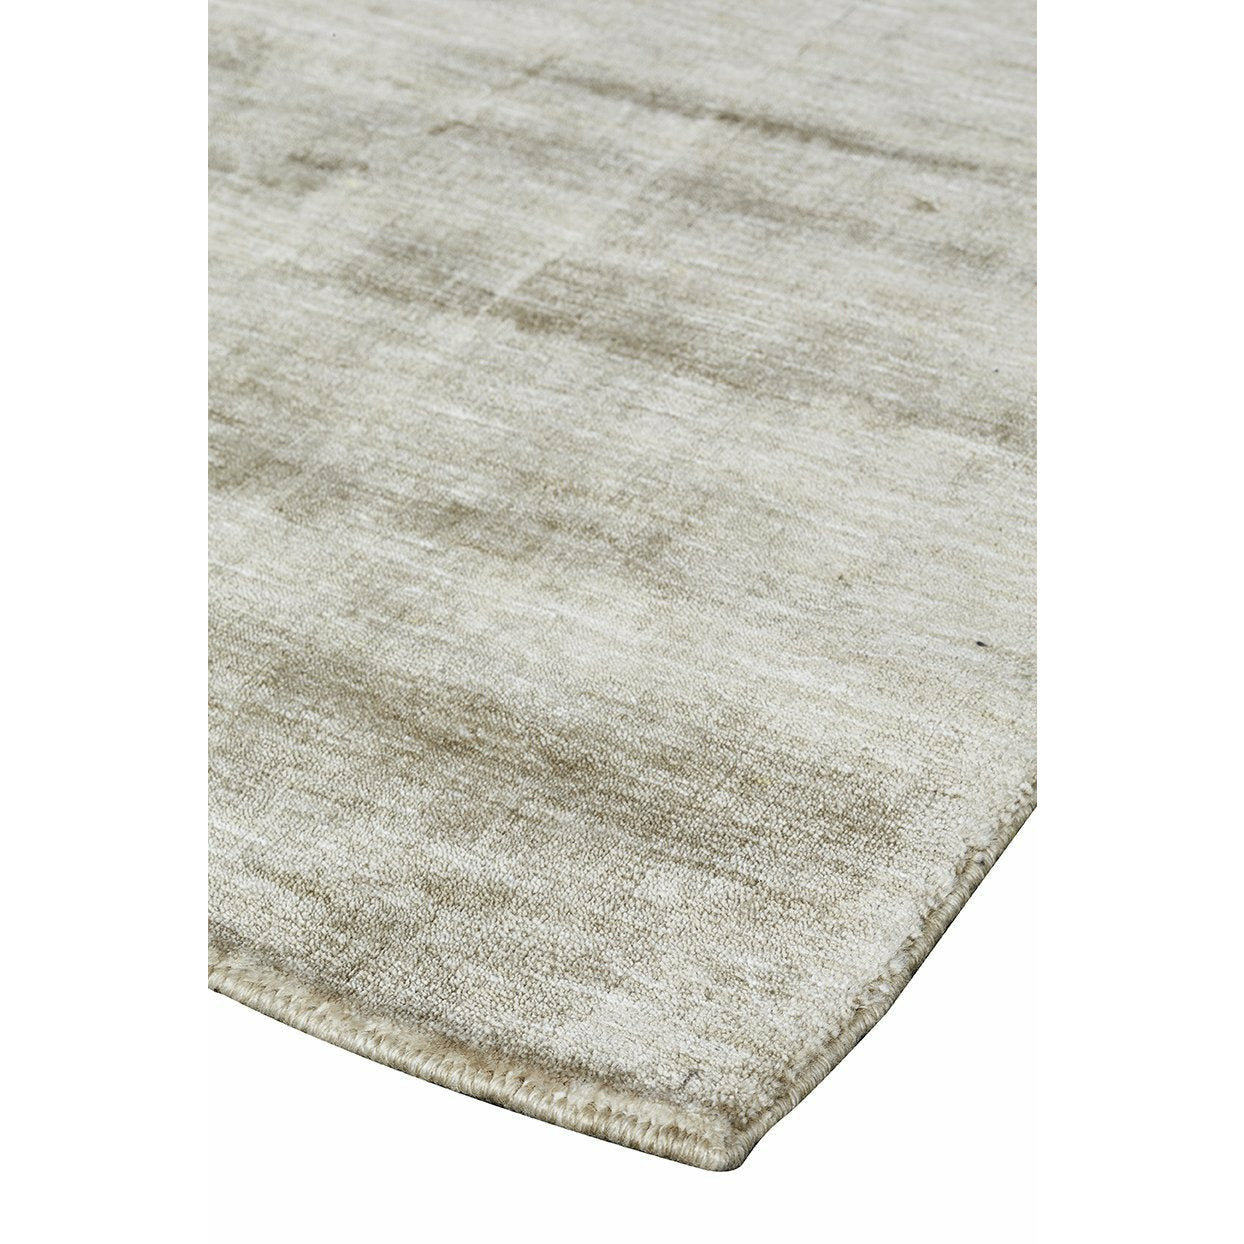 Massimo Bambu matto vaaleanruskea, 140x200 cm